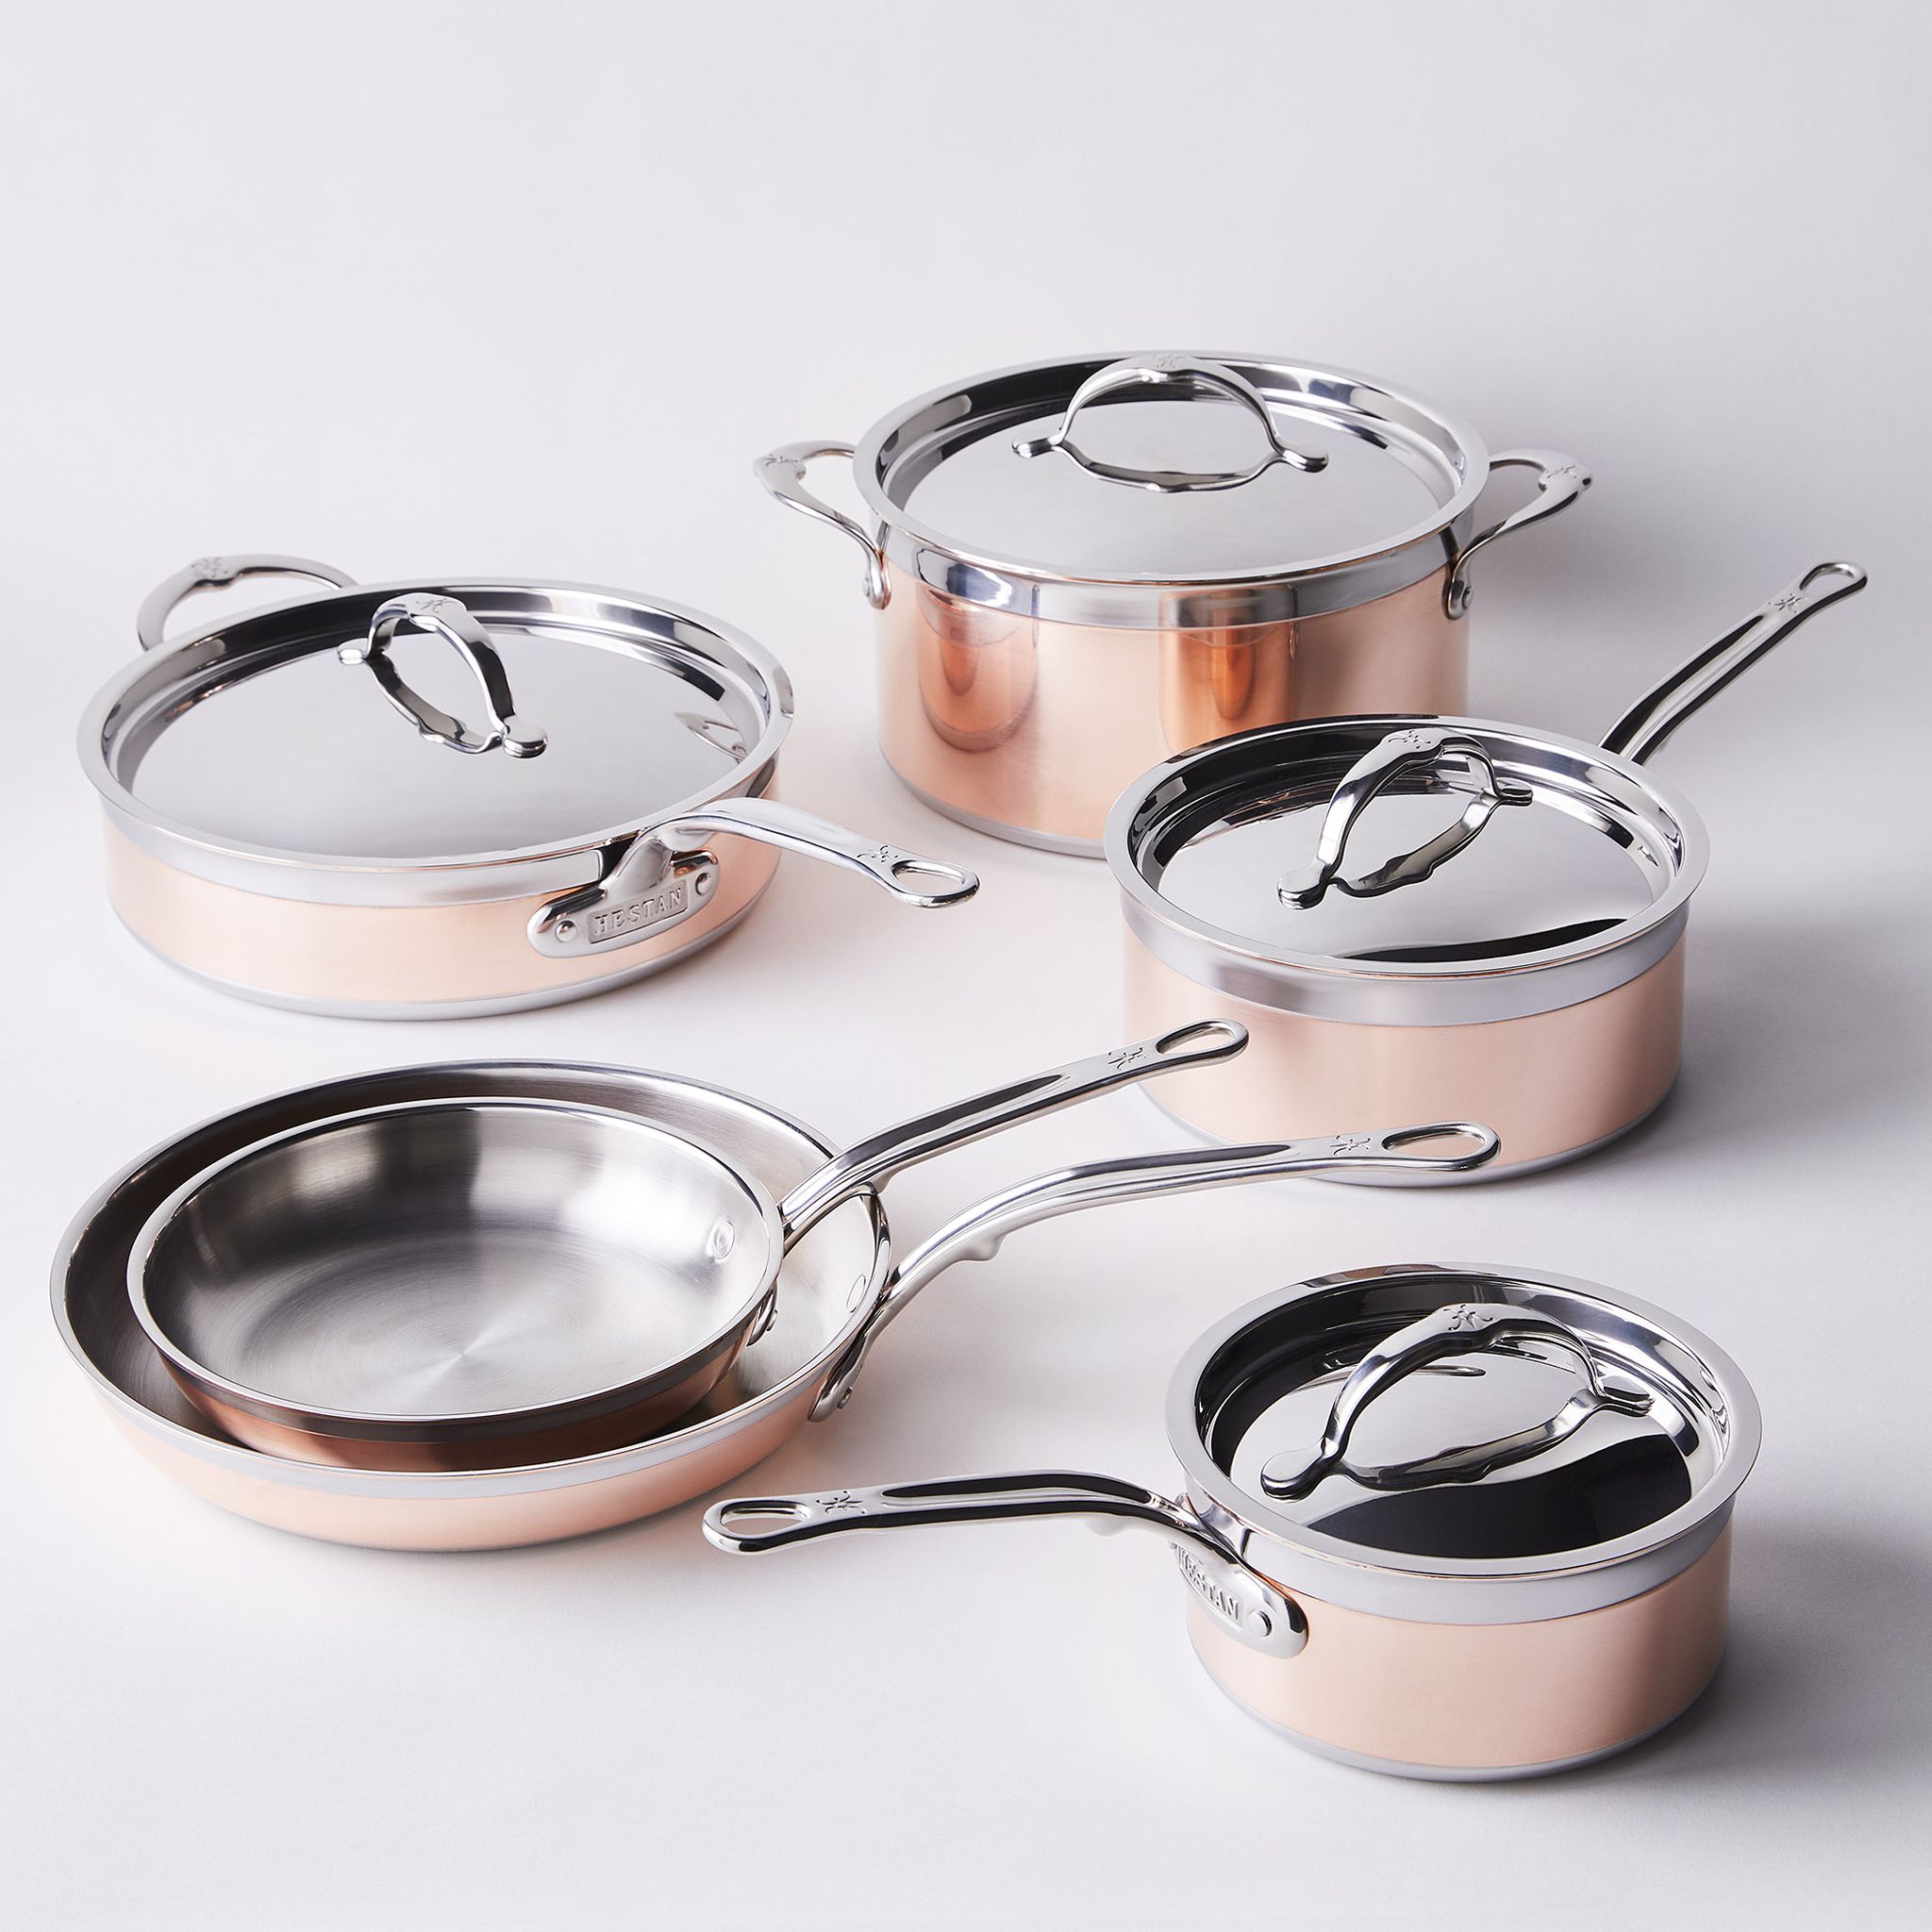 Hestan Copperbond Induction Copper Cookware, 10 Piece Set